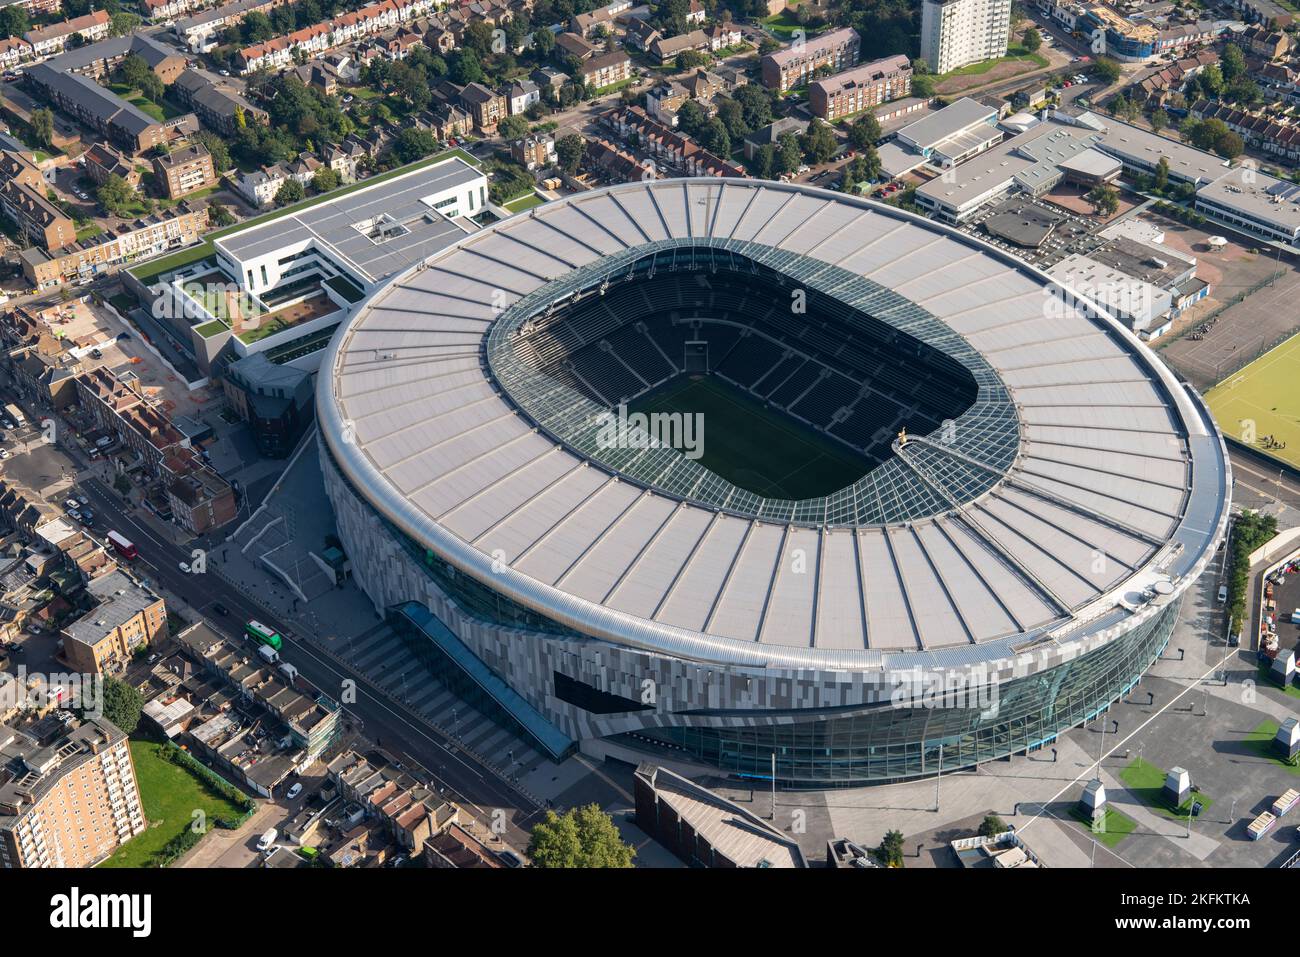 The new White Hart Lane Football Ground, home to Tottenham Hotspur Football Club, Tottenham, Greater London Authority, 2021 . Stock Photo